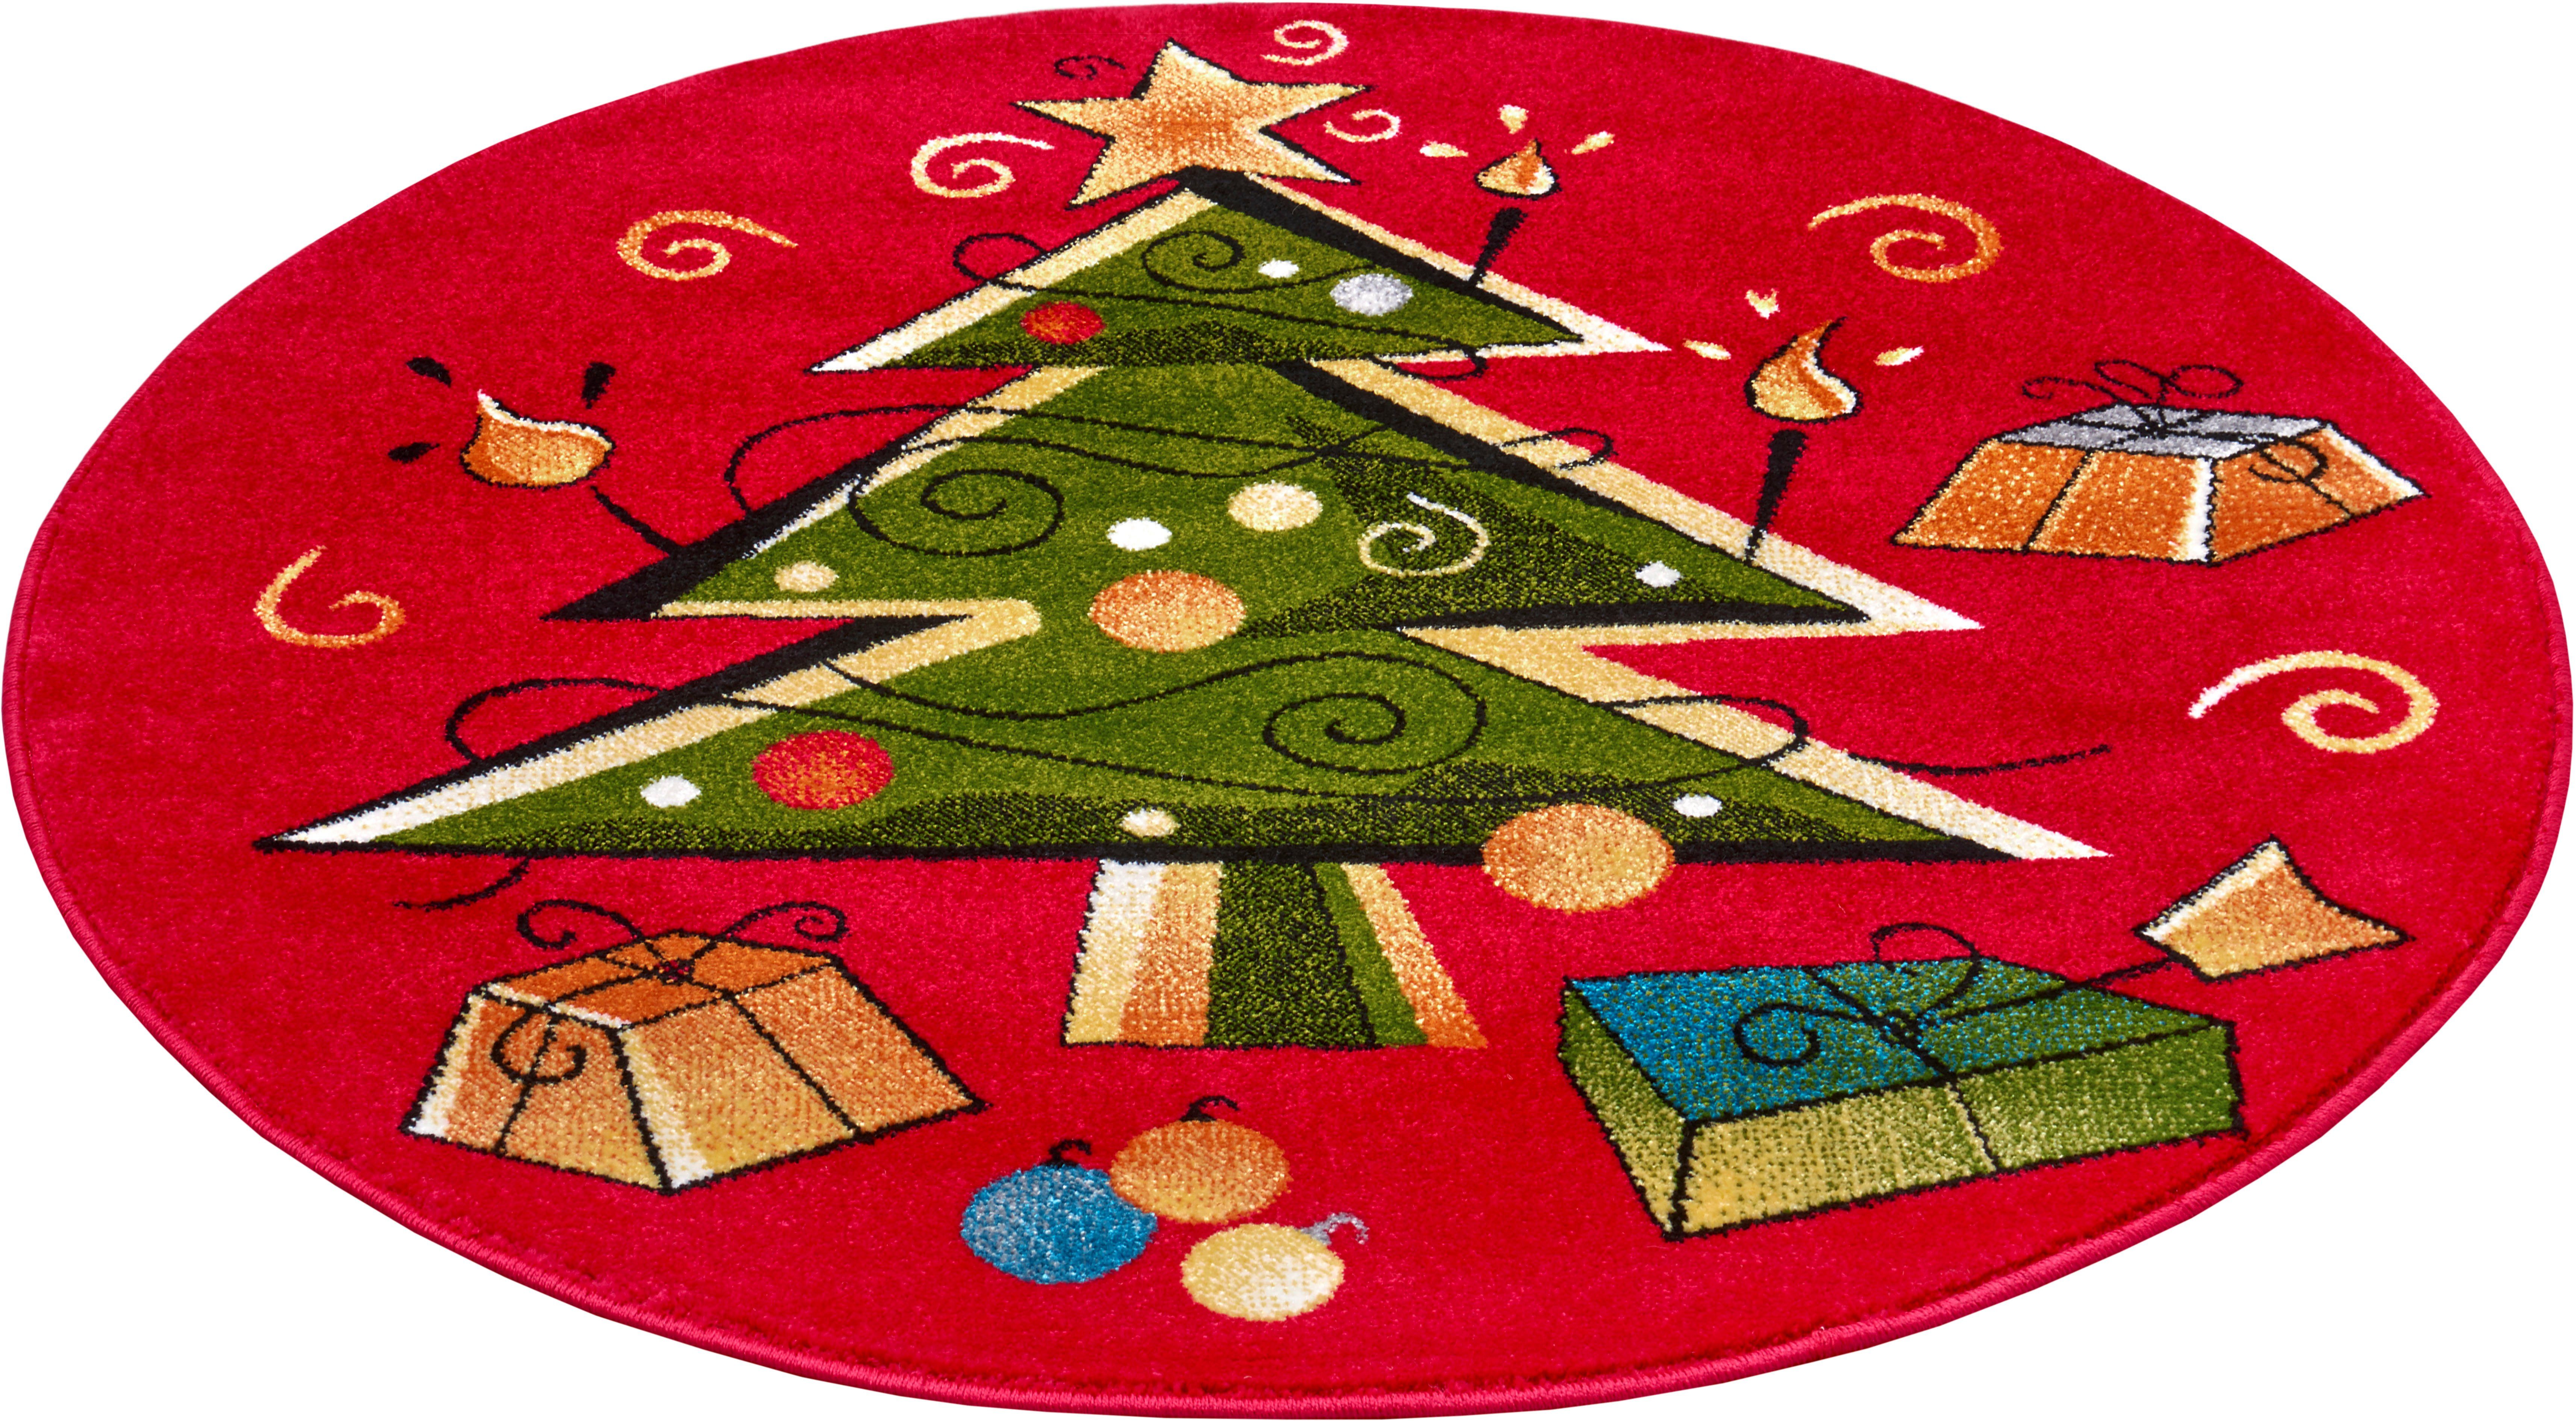 Rond kindervloerkleed kerstboom - rood/groen 80 cm rond